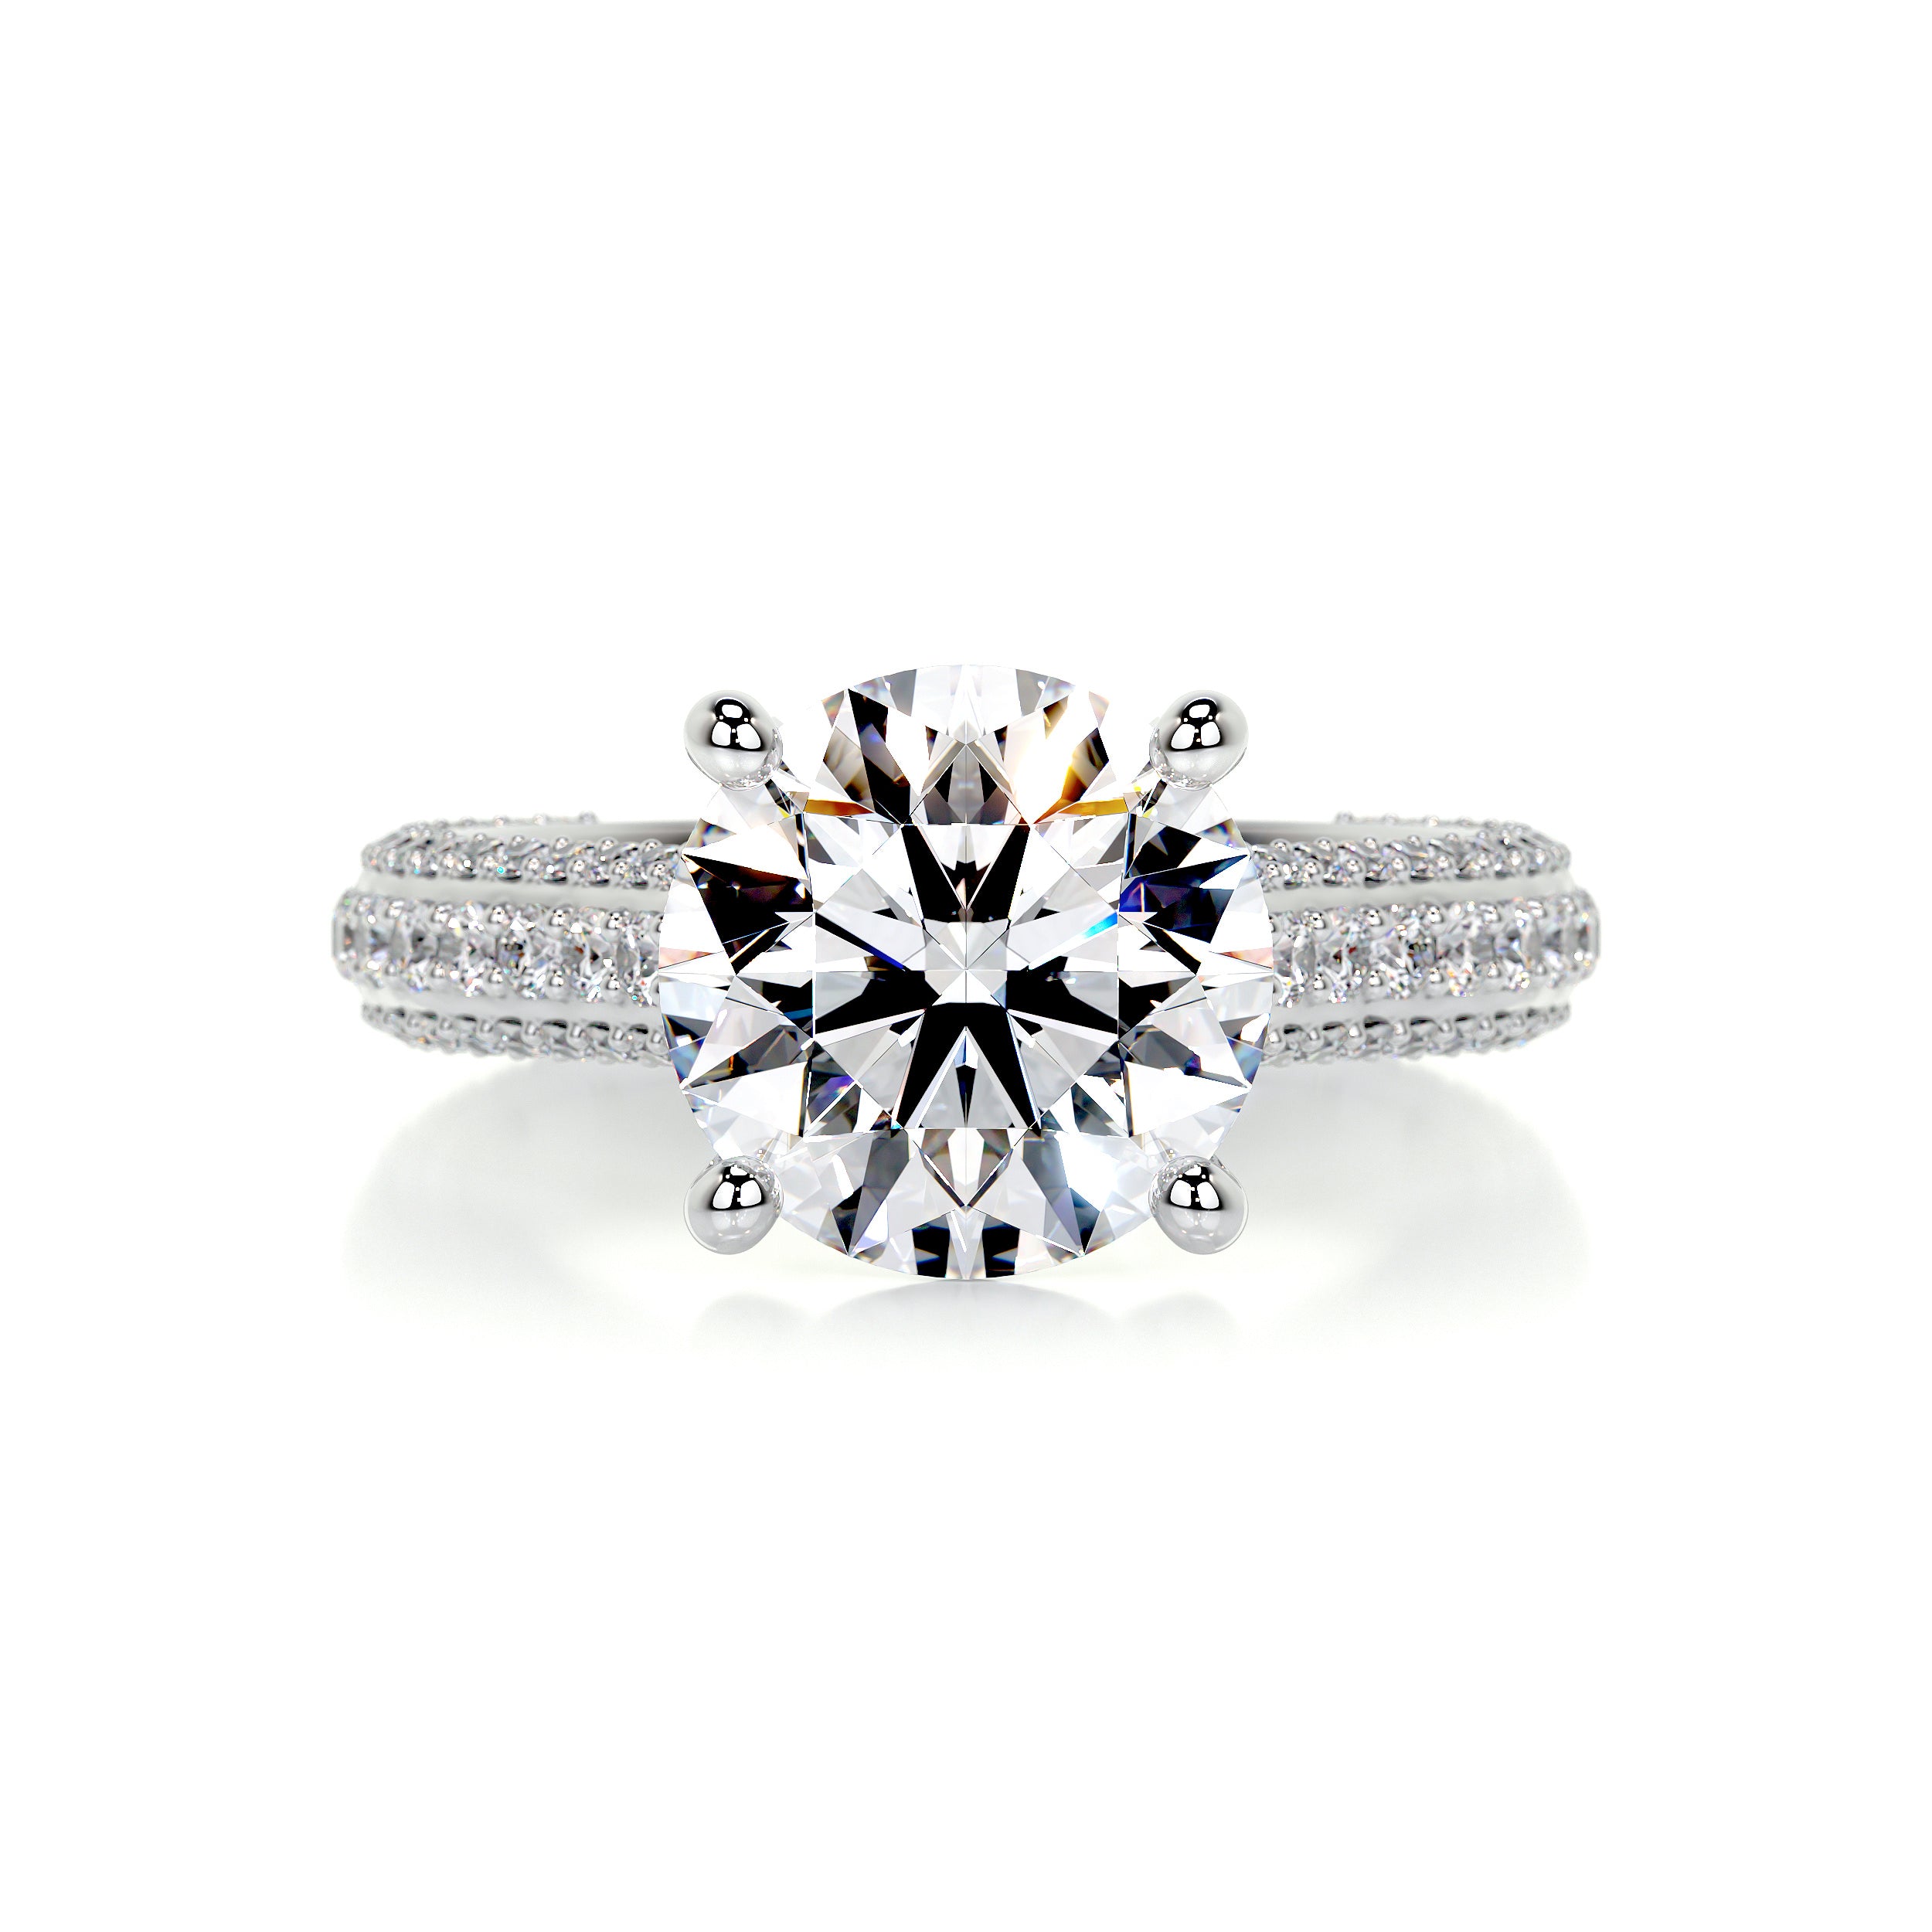 Janet Diamond Engagement Ring   (3.5 Carat) -Platinum